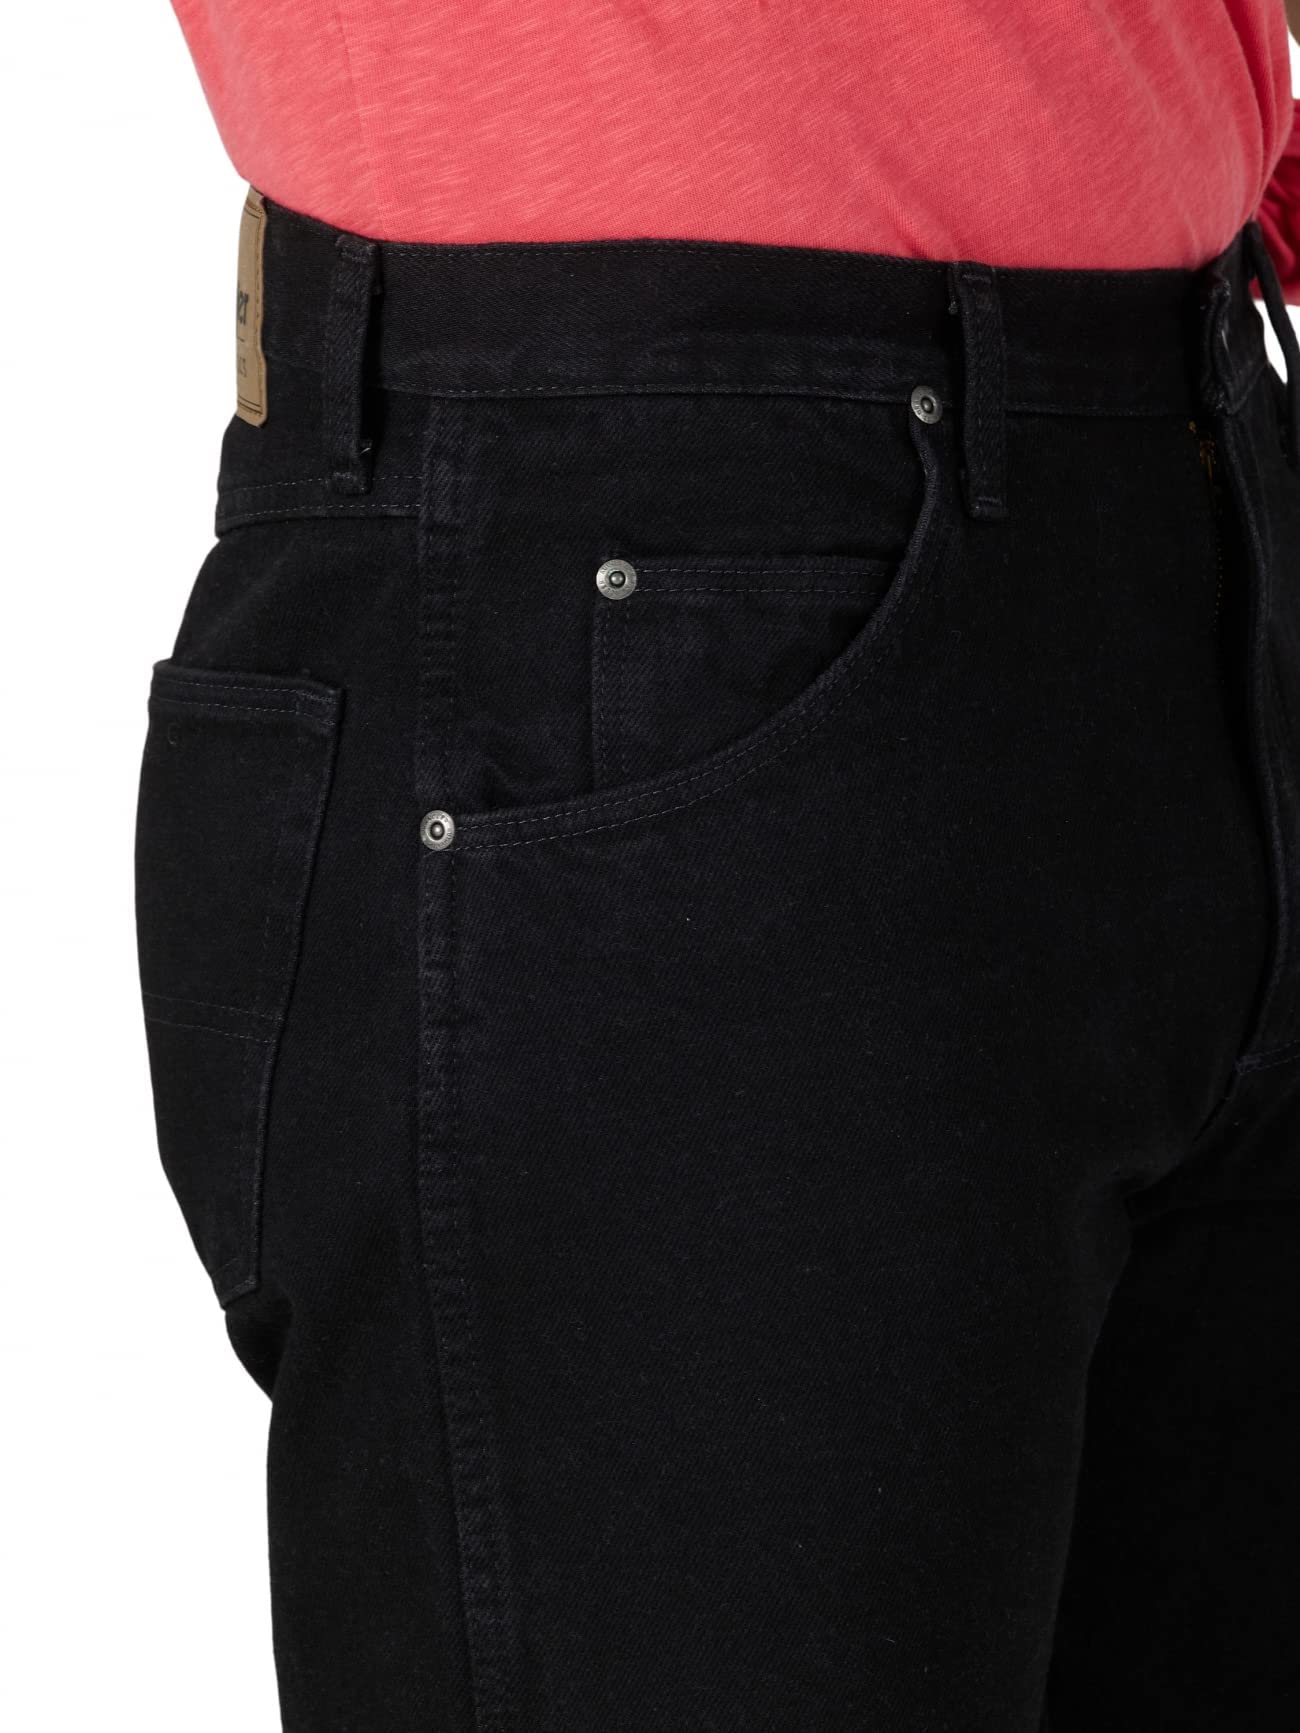 Wrangler Authentics Men's Classic 5-Pocket Regular Fit Cotton Jean, Black, 35W x 30L